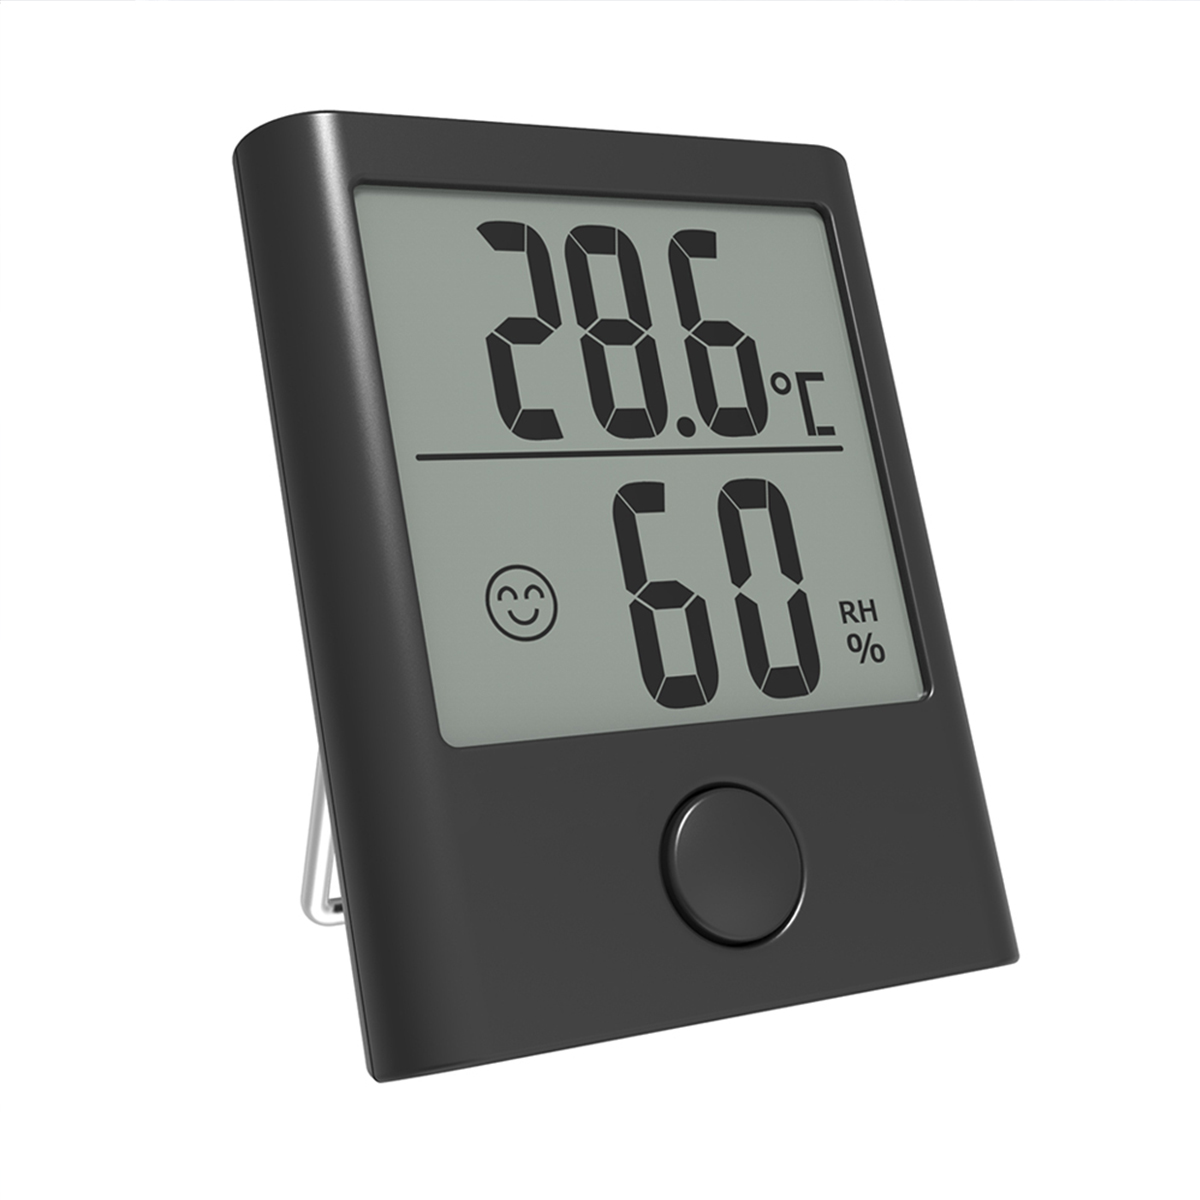 

Mini LCD Digital Thermometer Hygrometer Meter Humidity Indoor Room